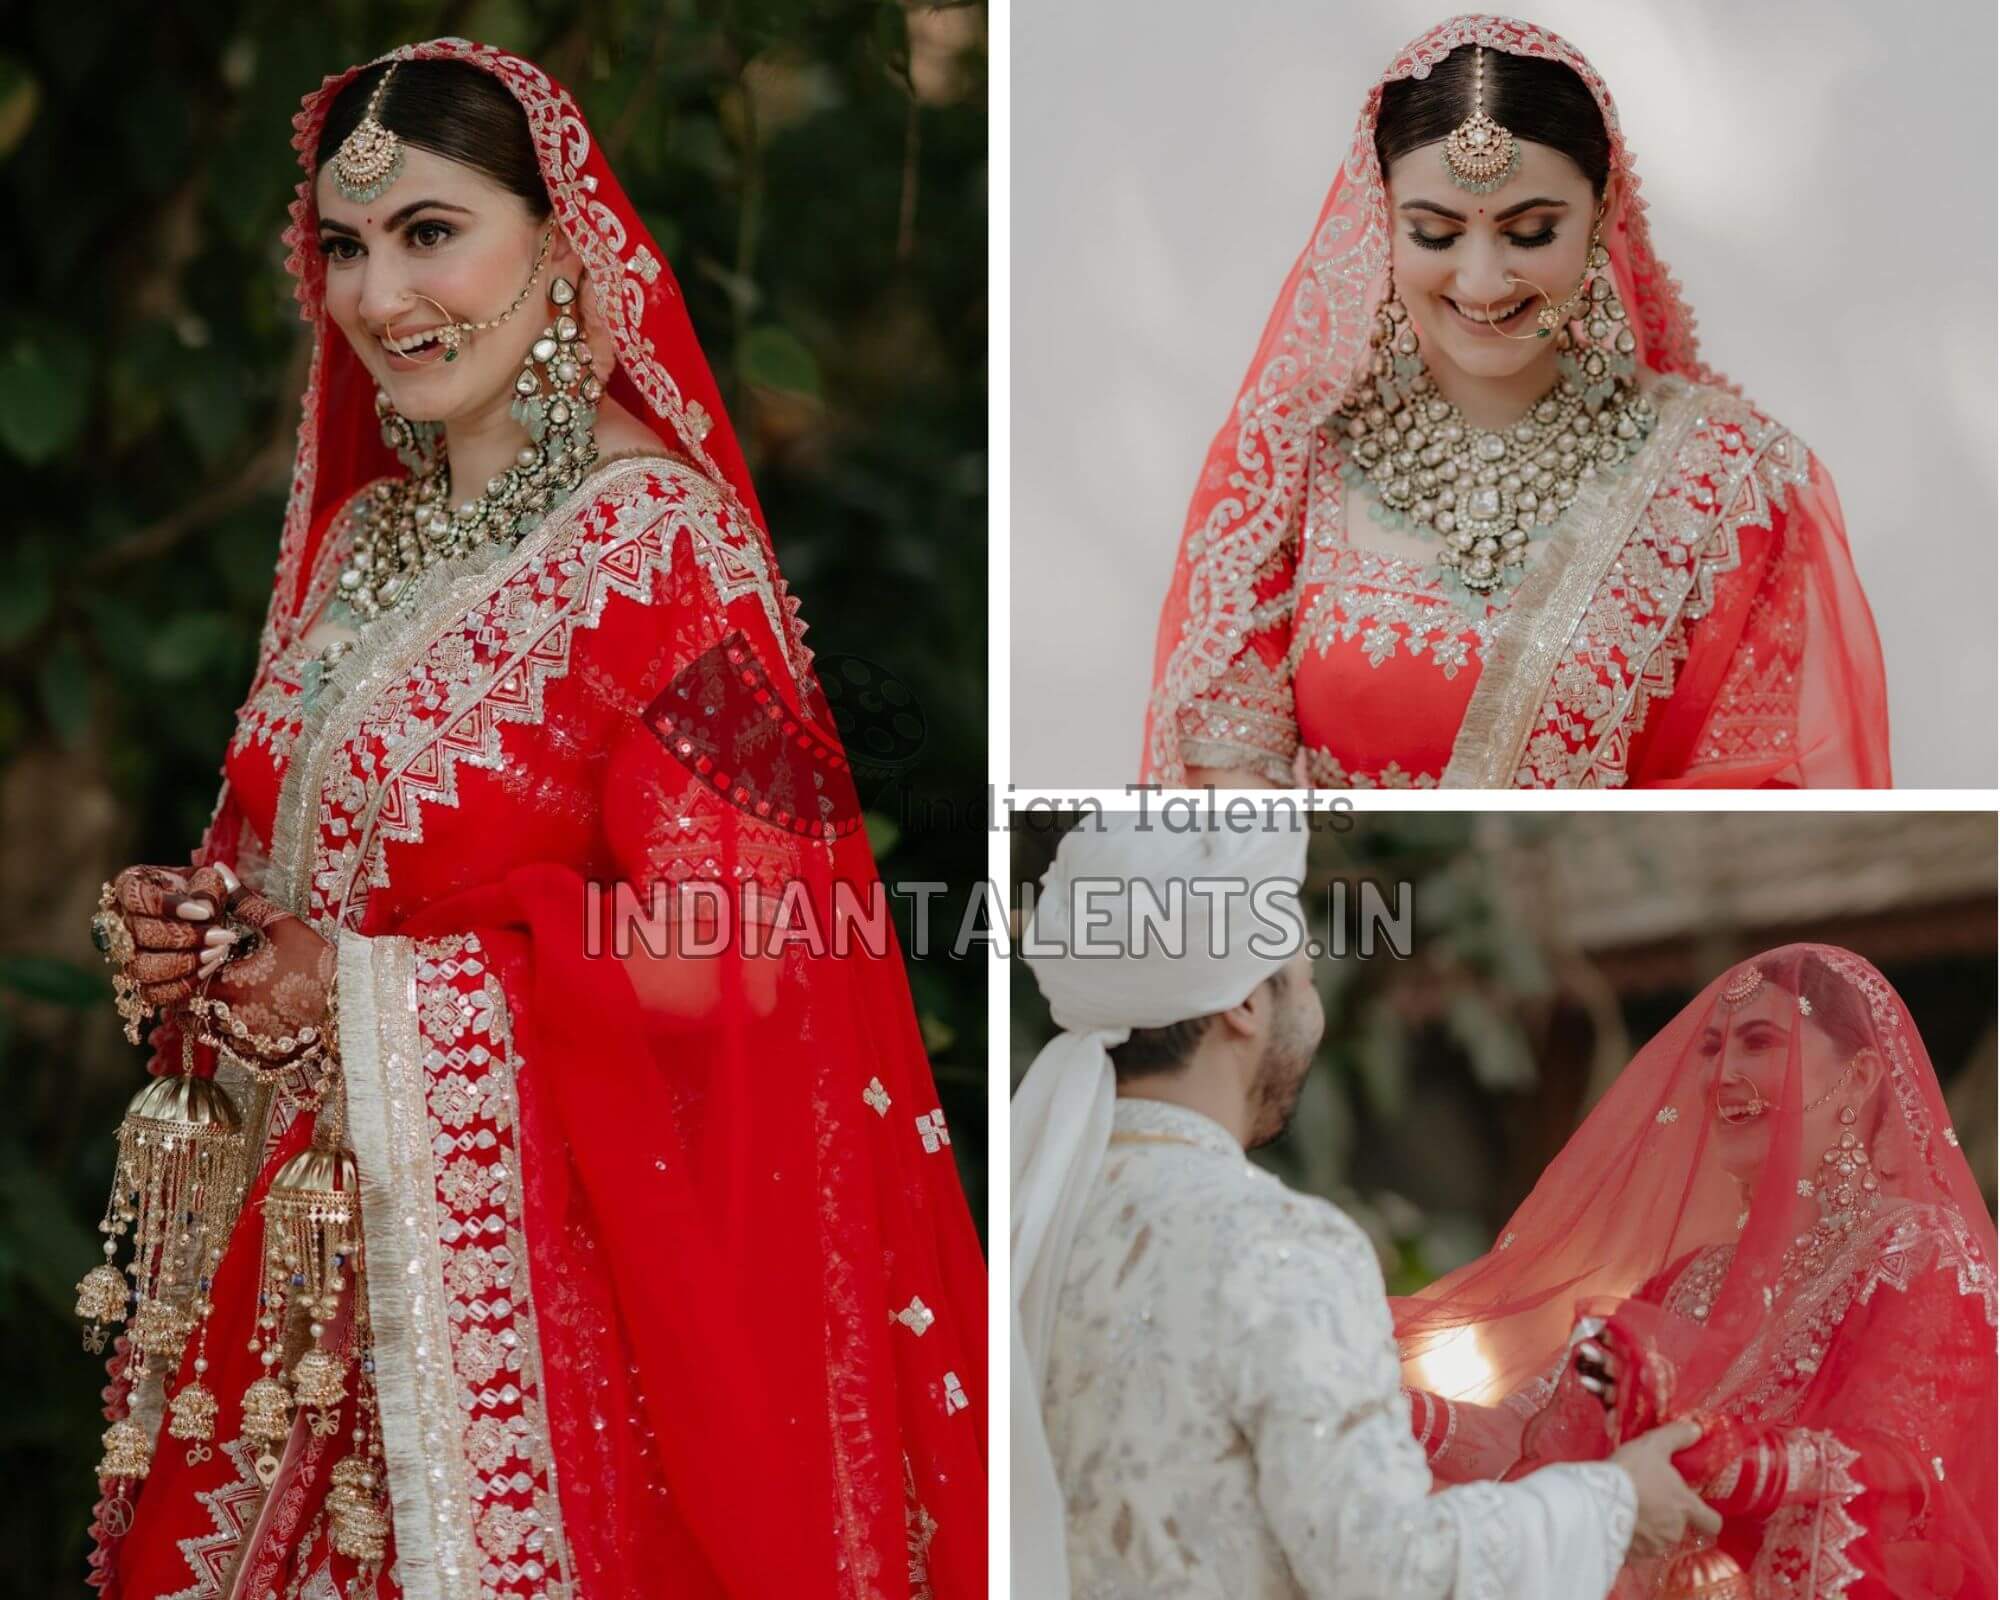 Shivaleeka Oberoi from Her Wedding Photos